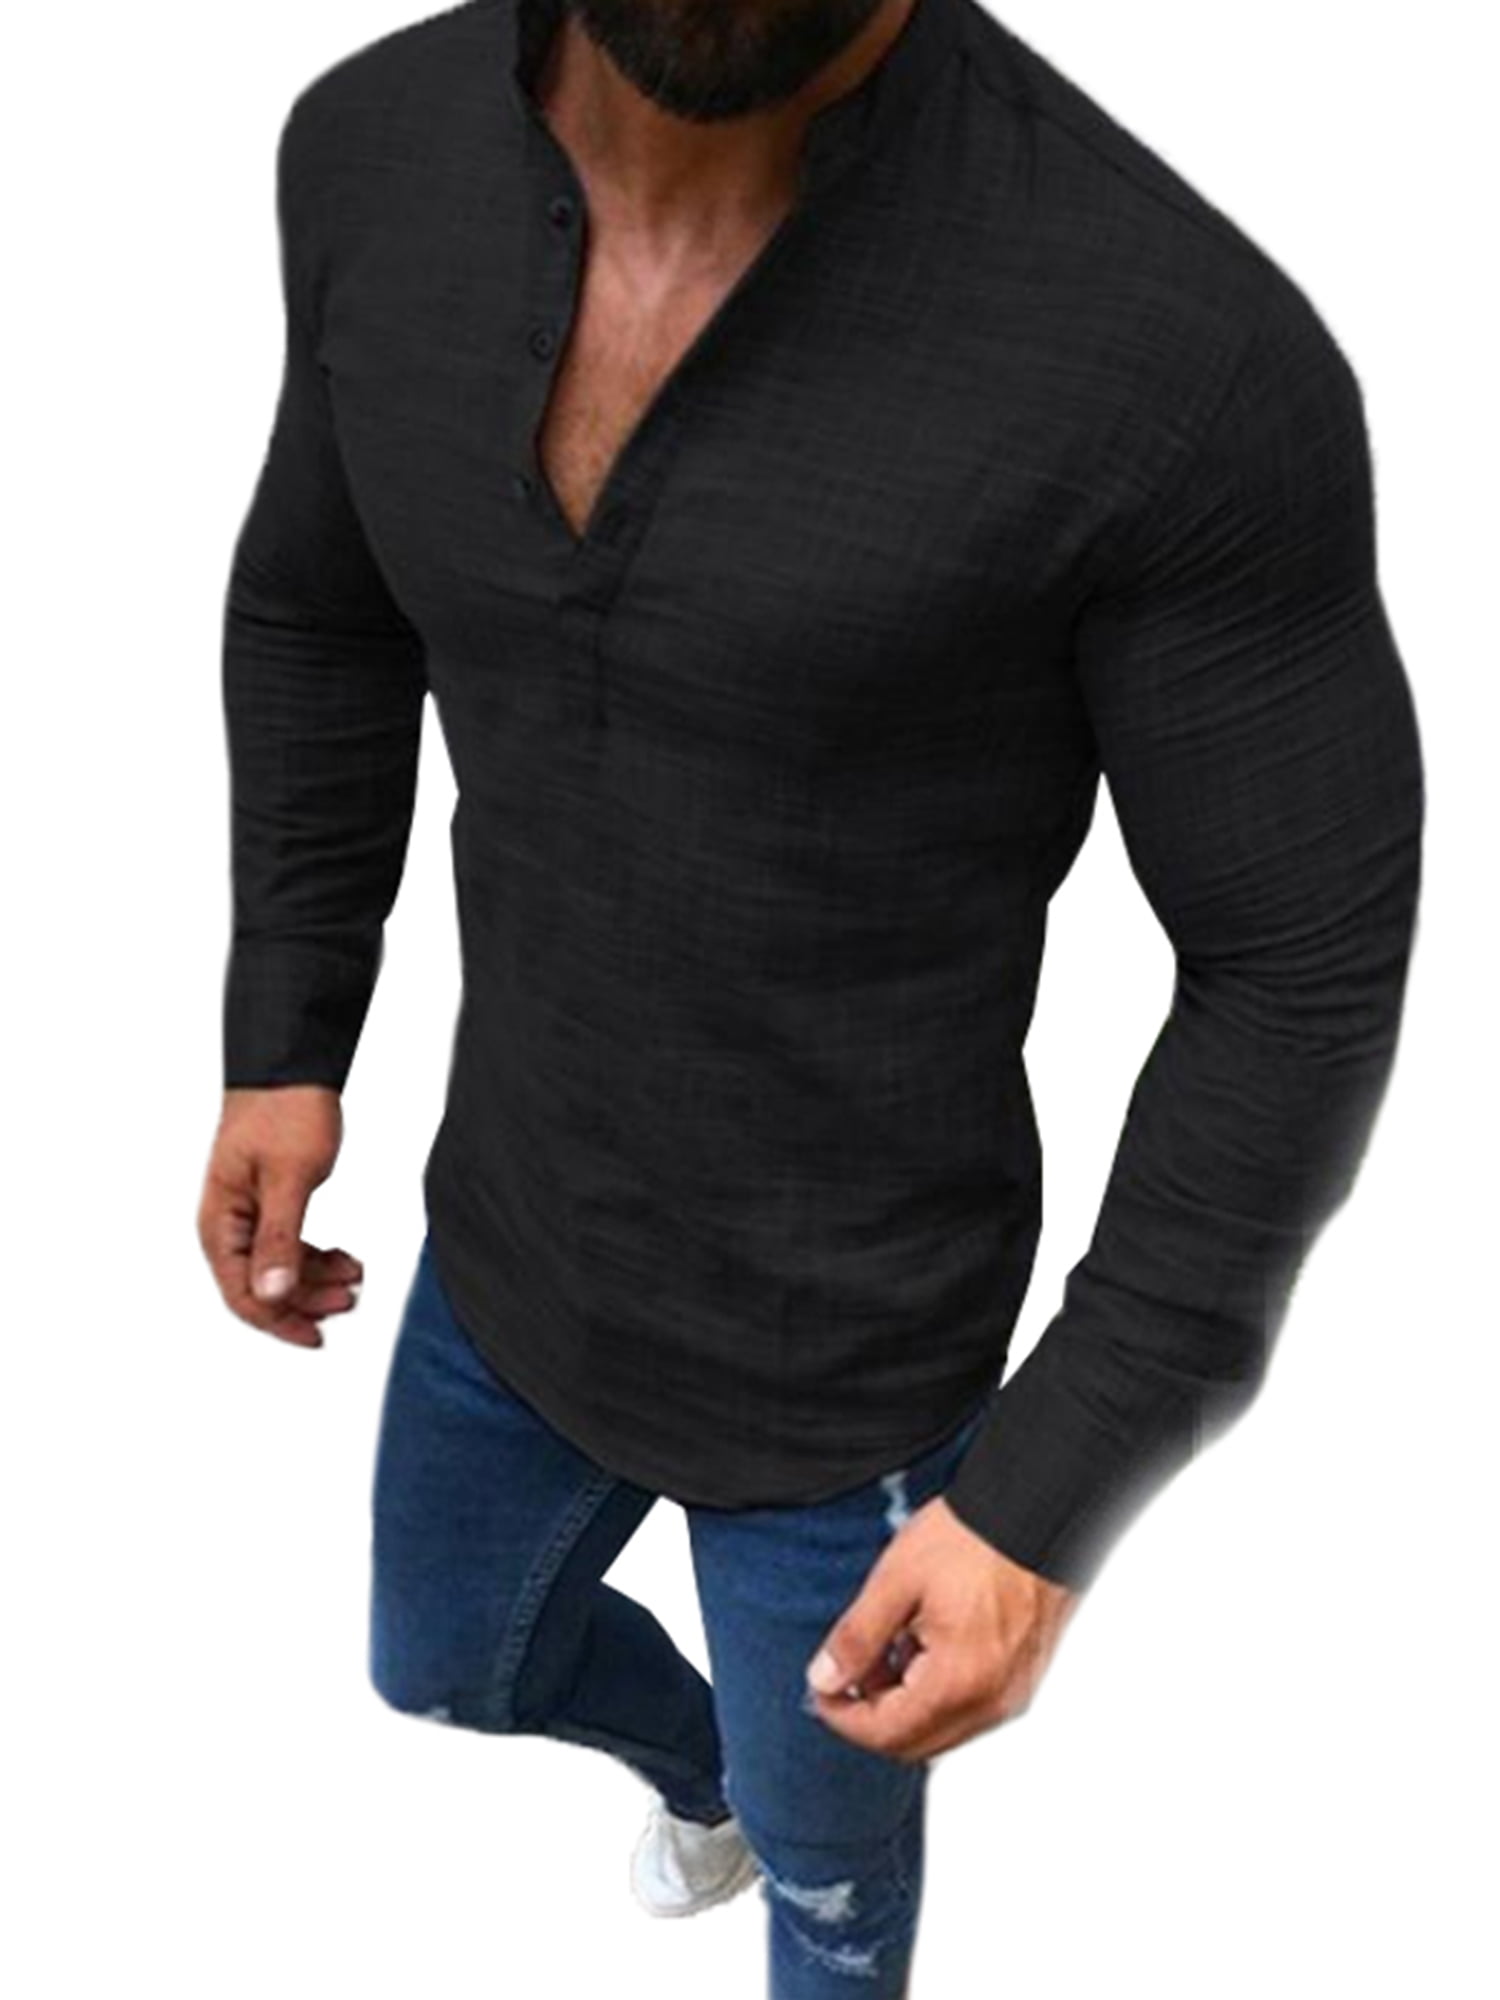 NEW Men's V-Neck Shirt Top Formal Muscle Henley Smart T shirt Blouse Shirts Tee 